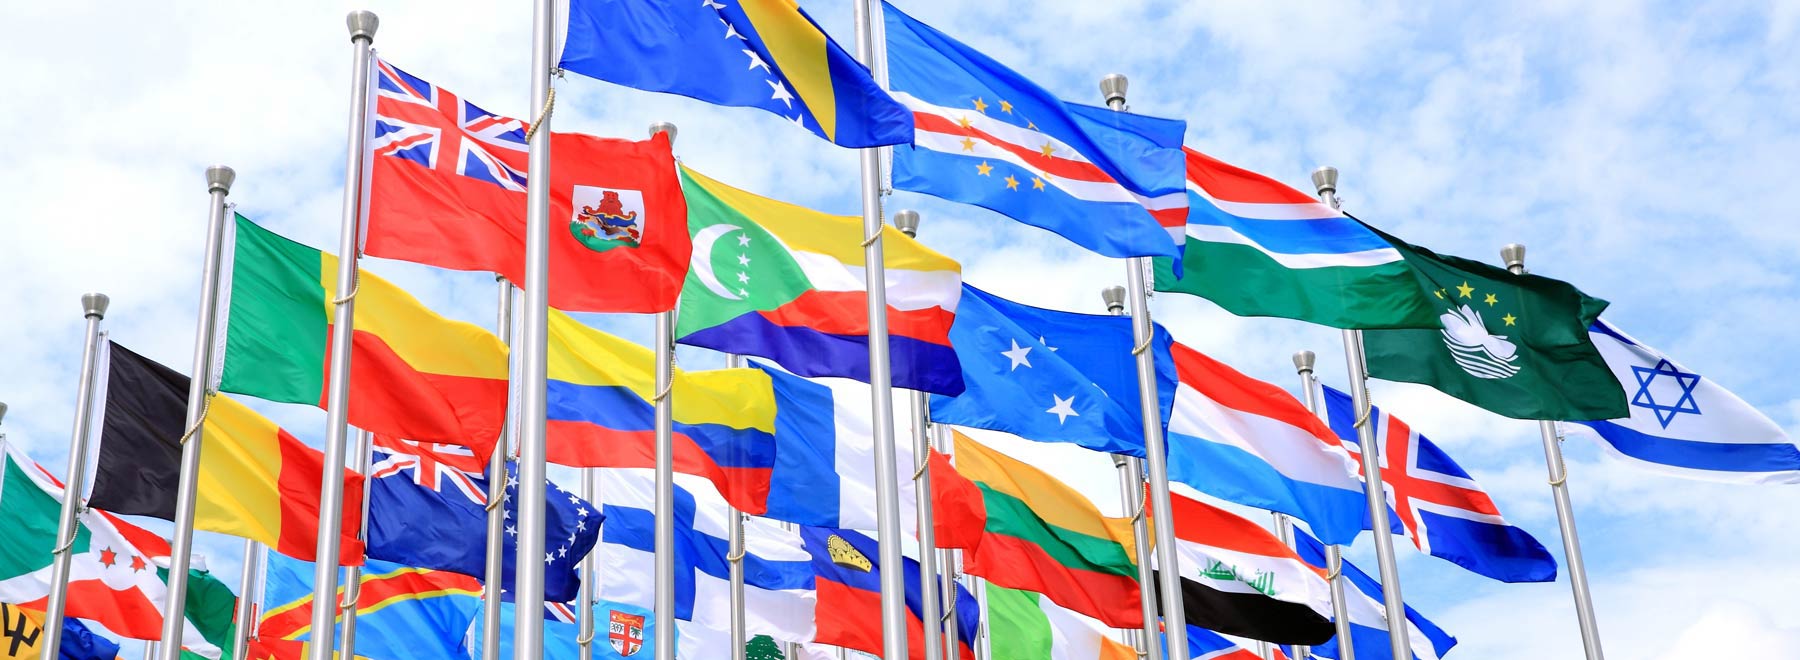 Row of international flags